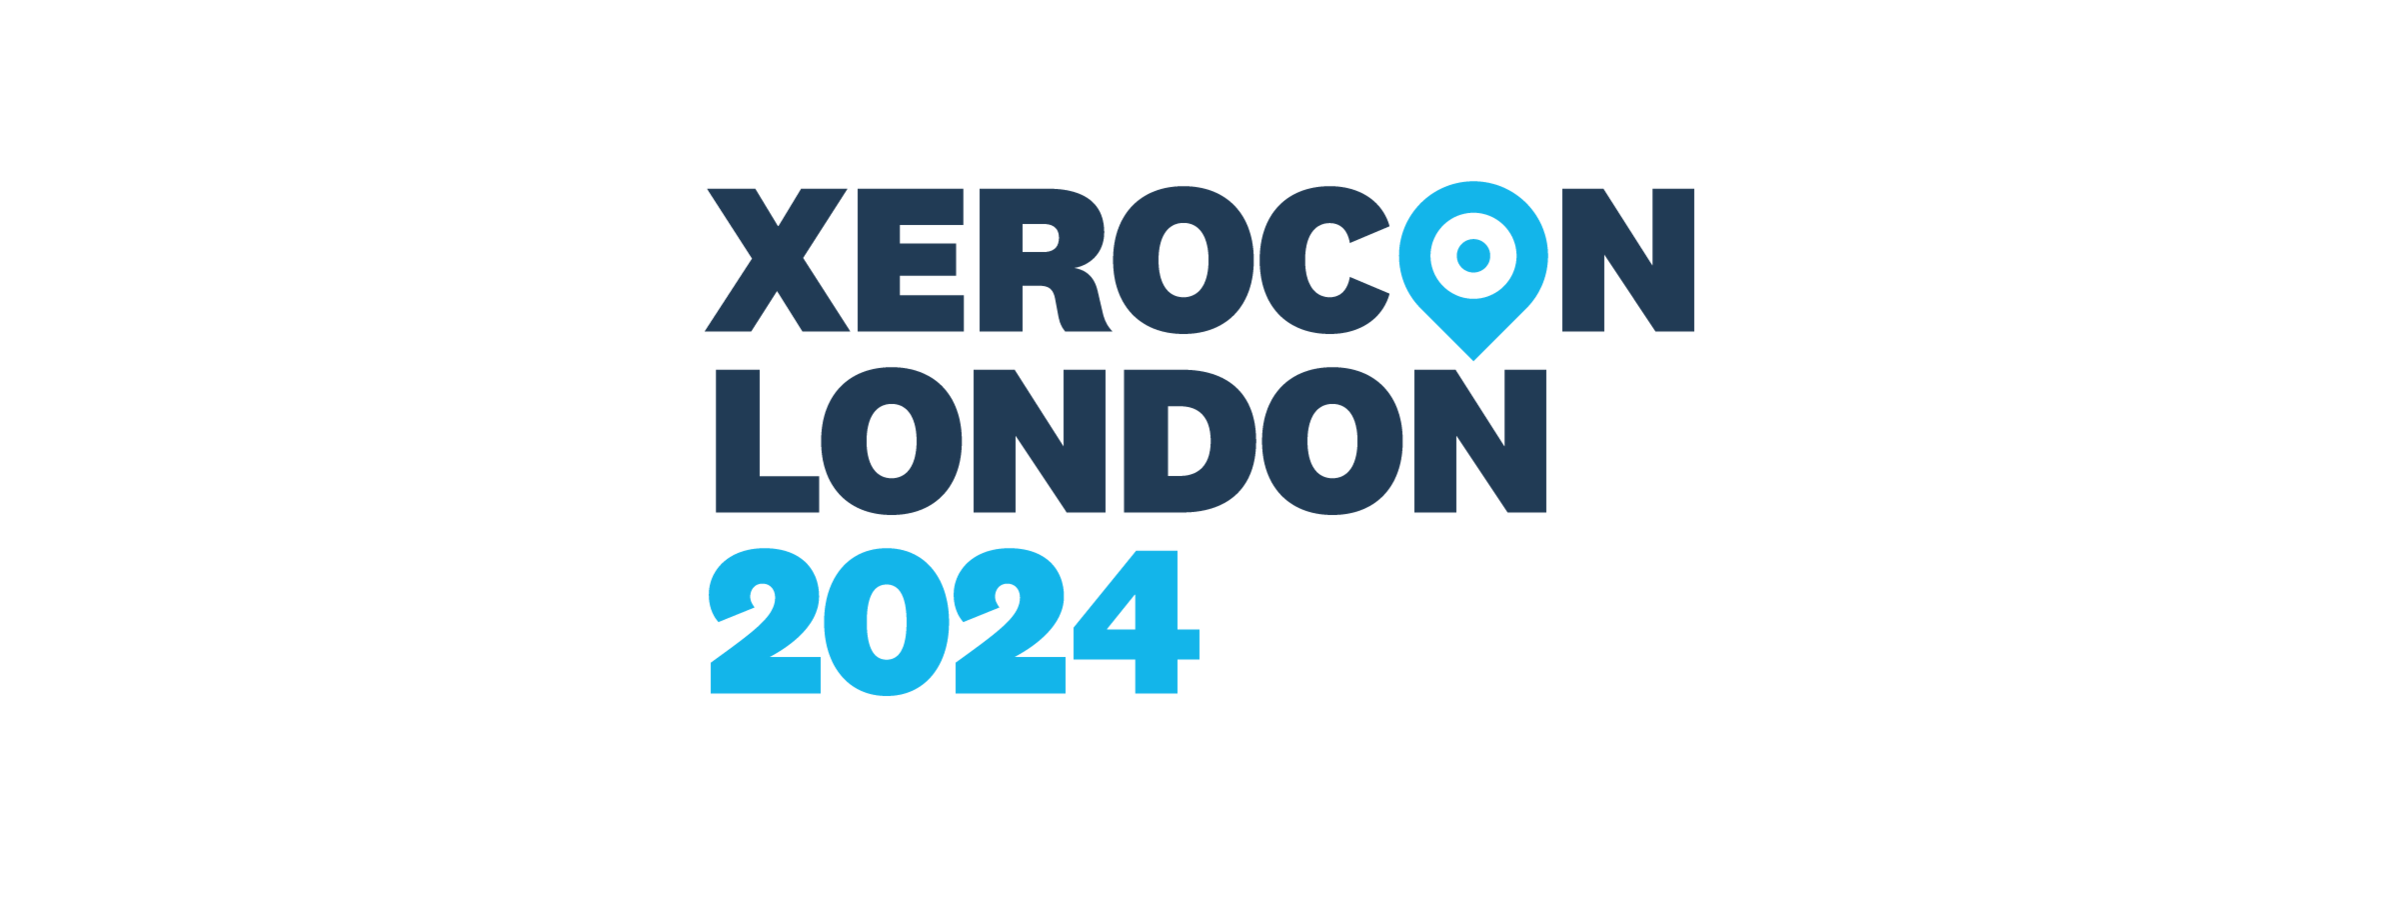 Xerocon London 2024